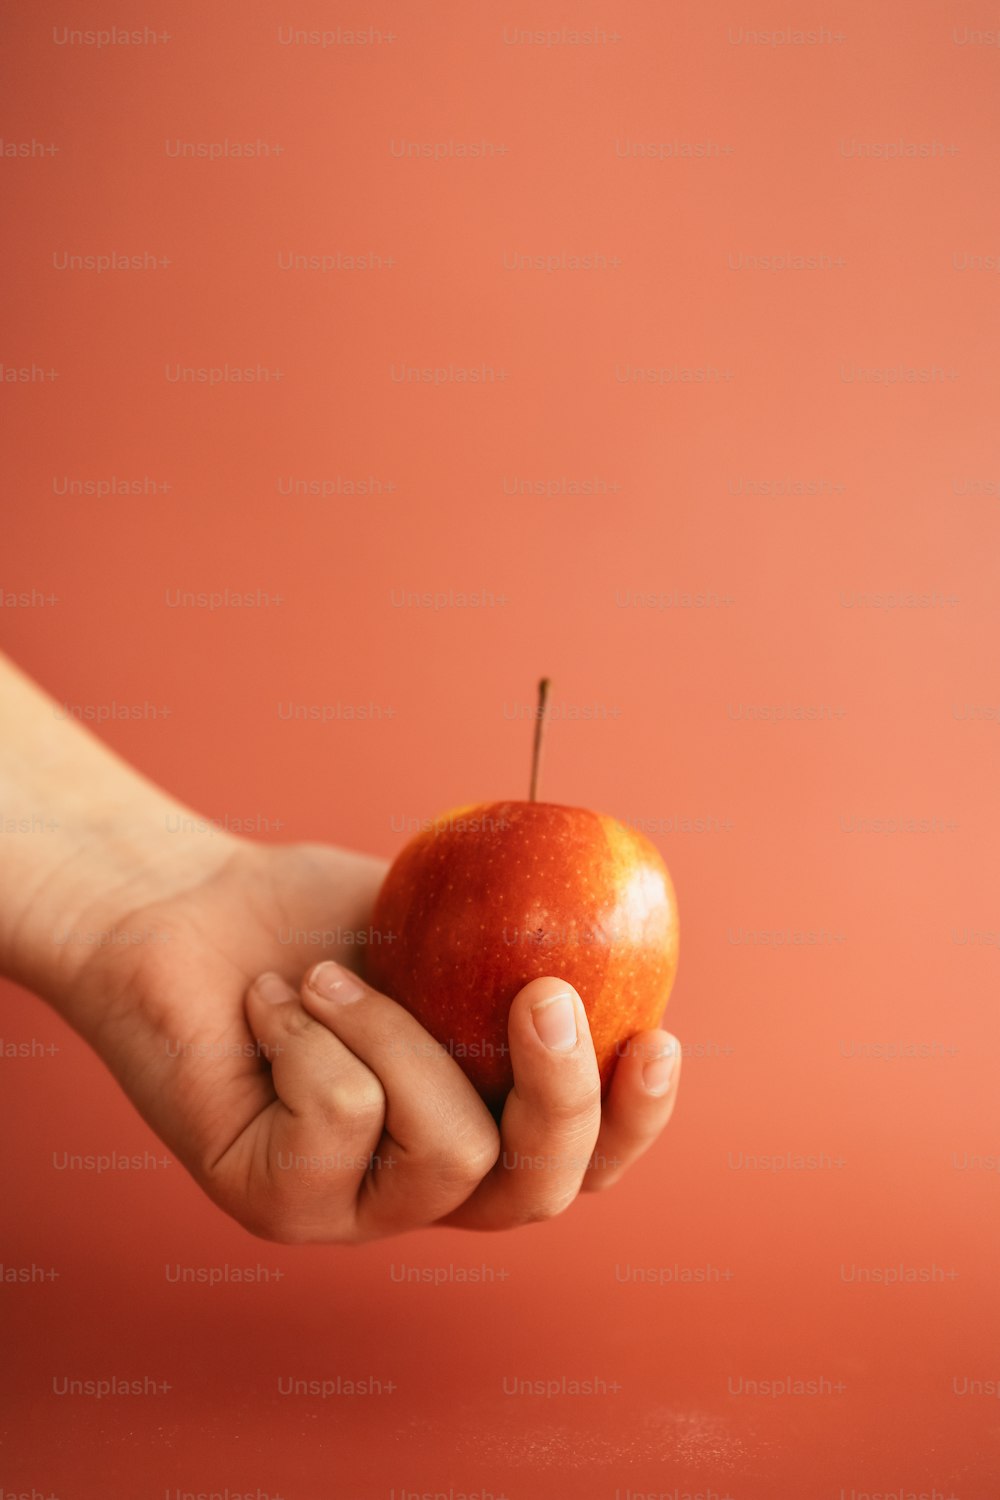 una persona che tiene una mela in mano